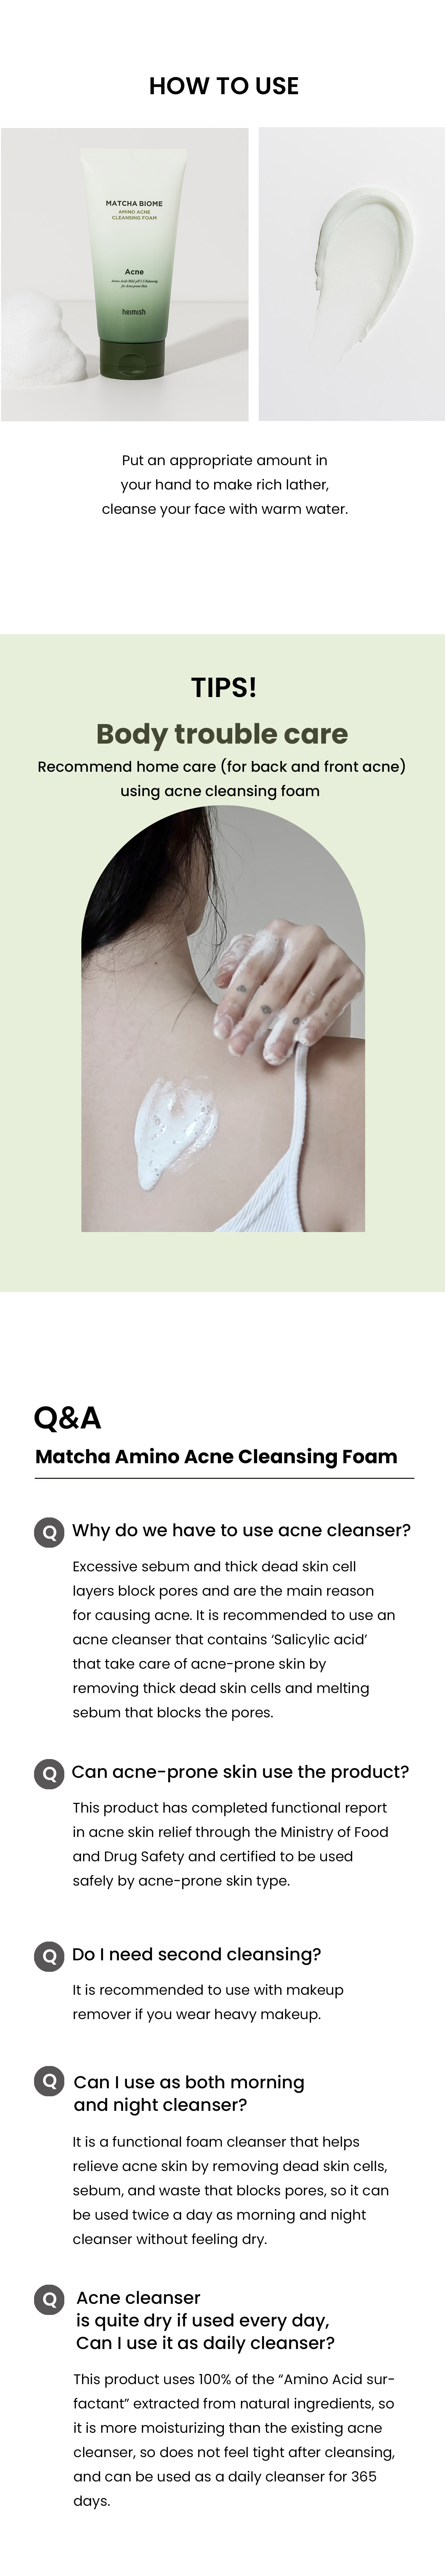 heimish - Matcha Biome Amino Acne Cleansing Foam - 150g